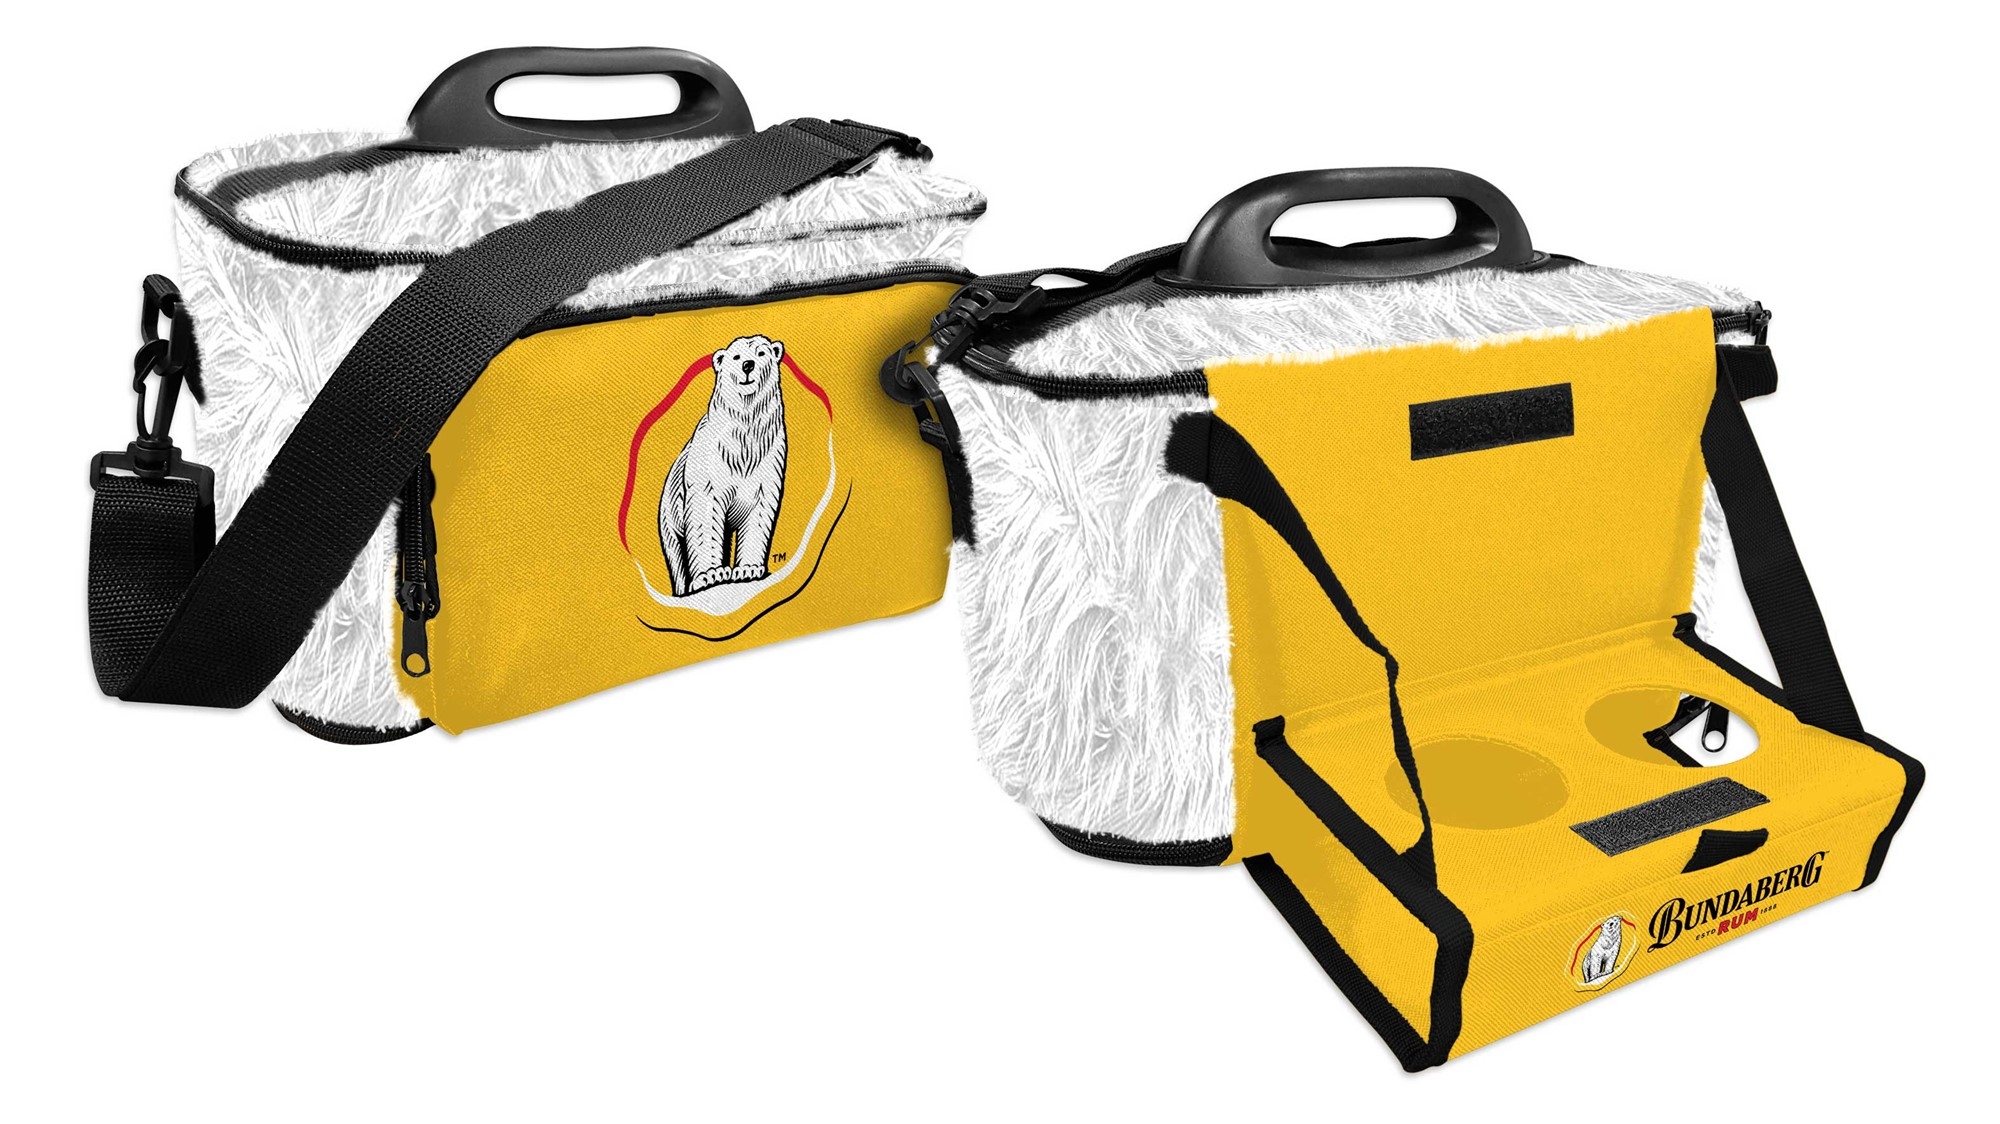 Bundaberg Cooler Bag & Tray